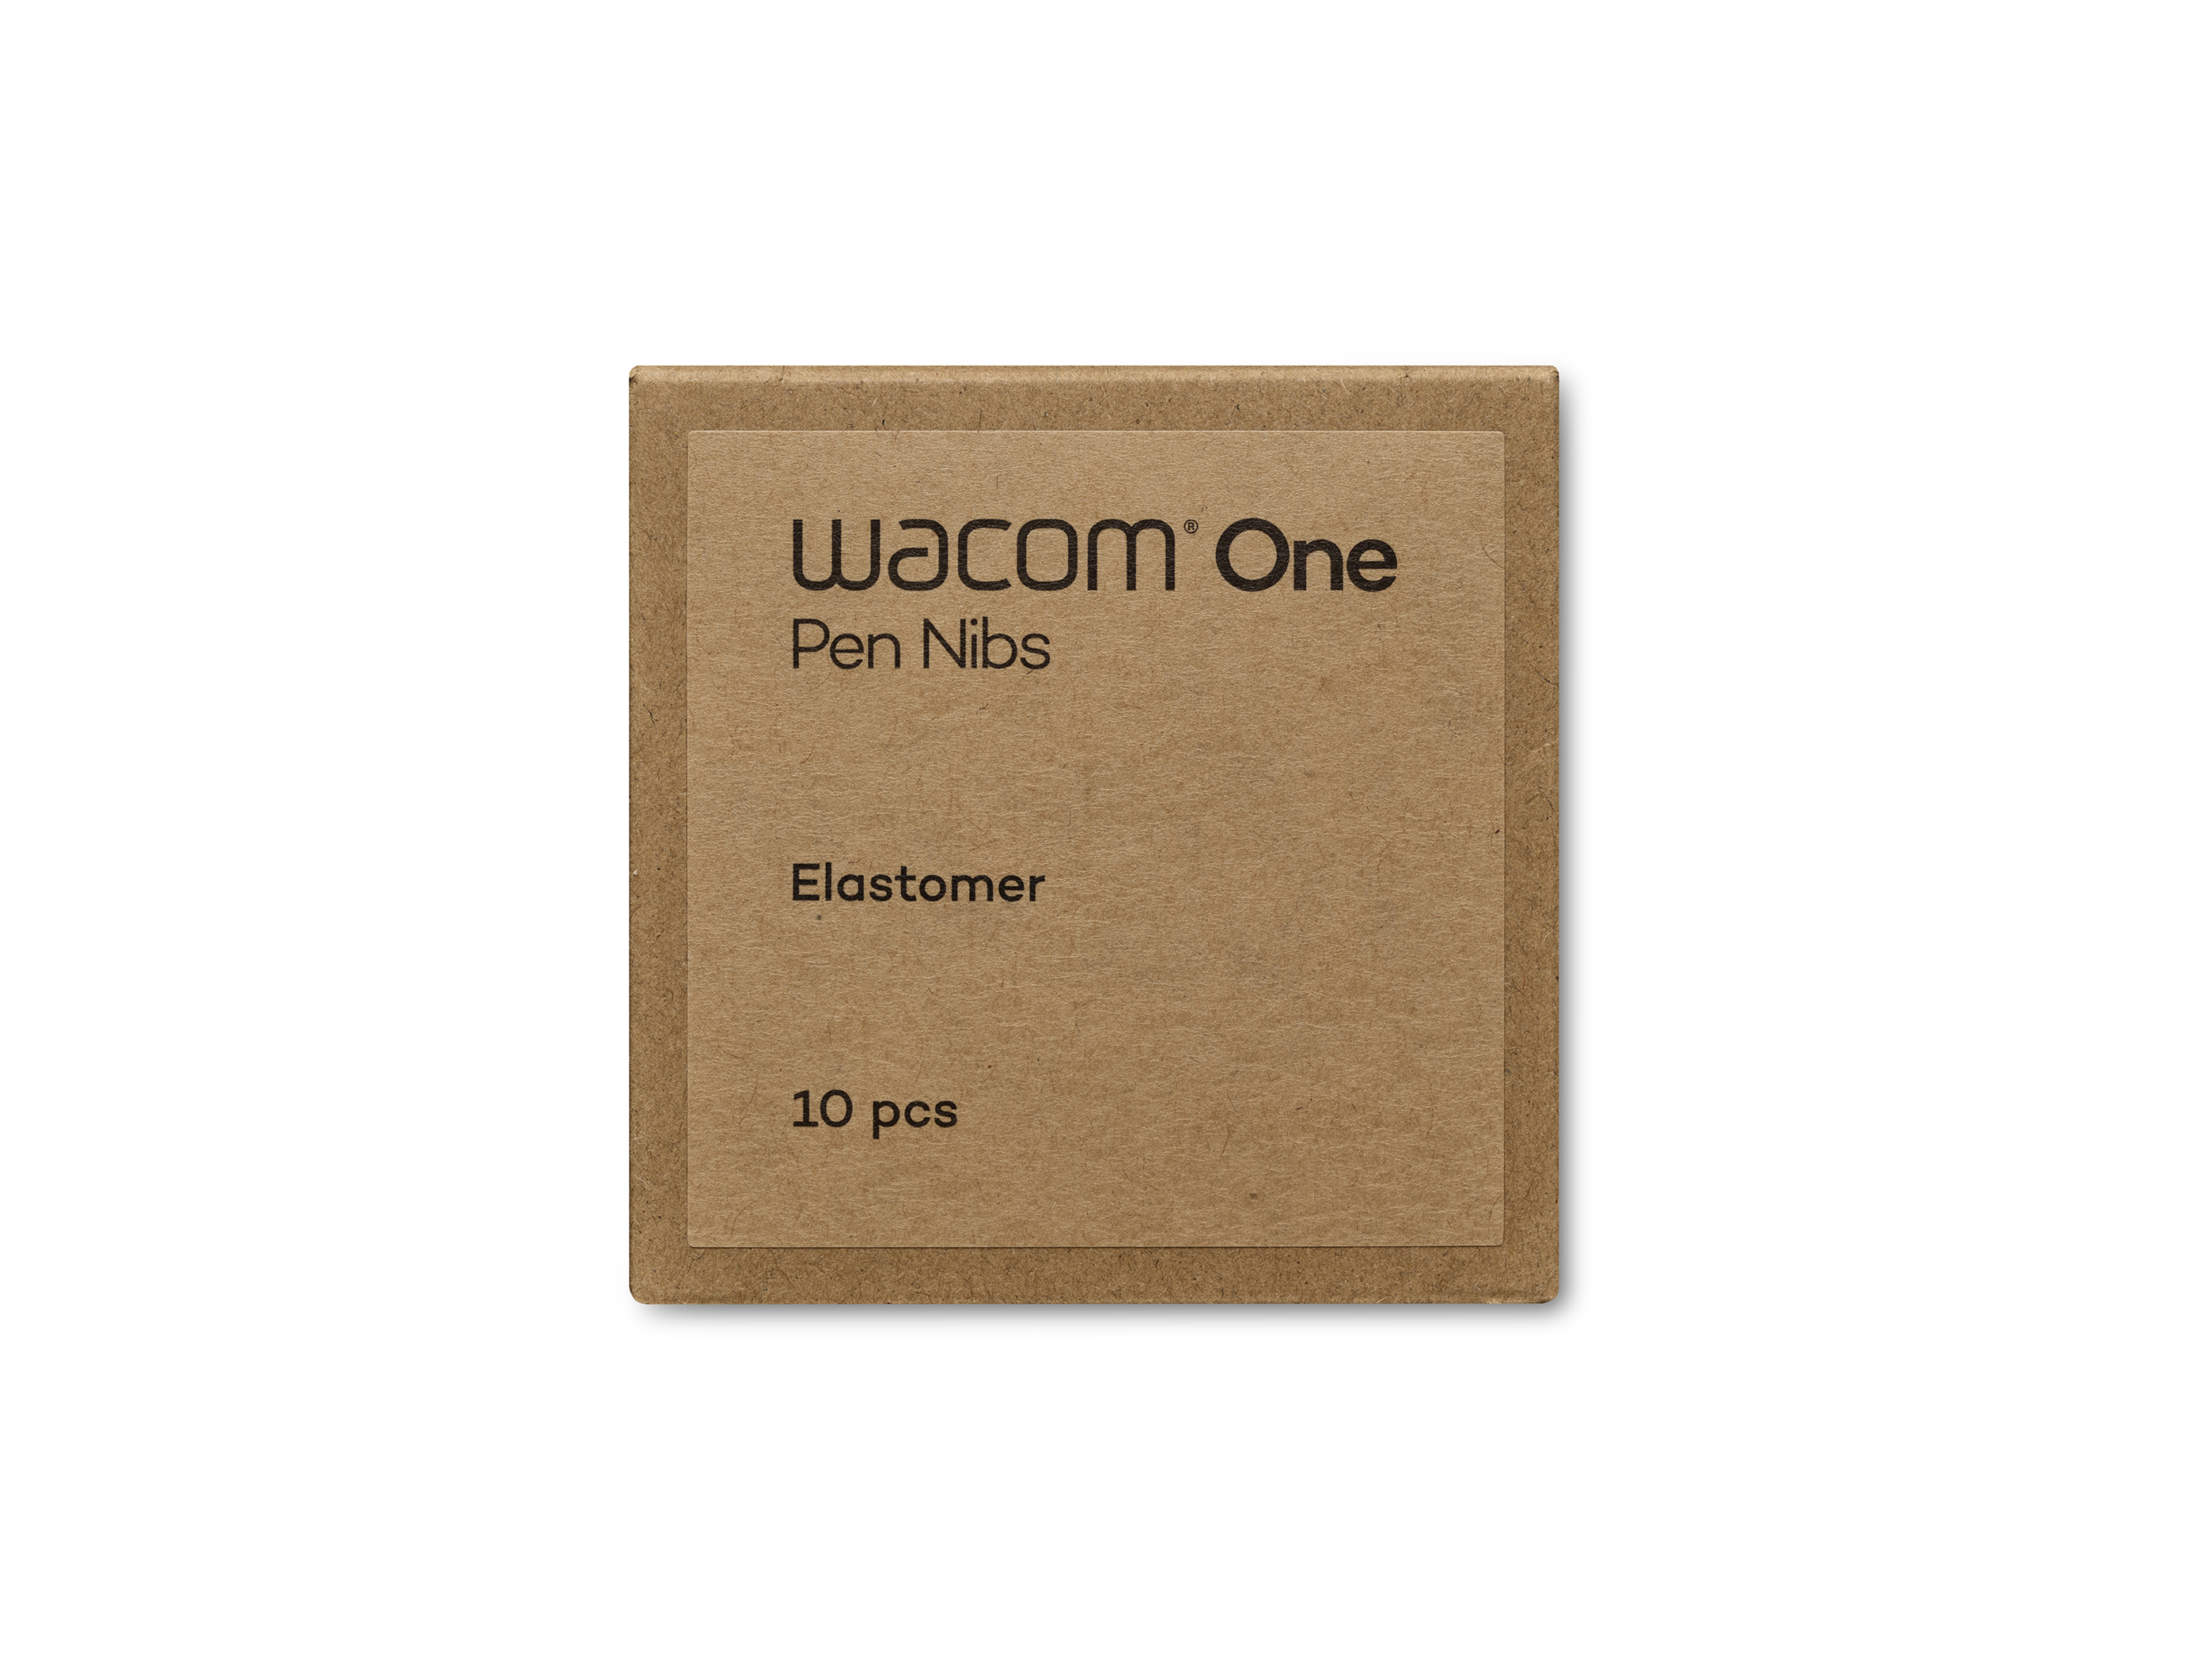 Wacom One: creative pen display tablet and pen